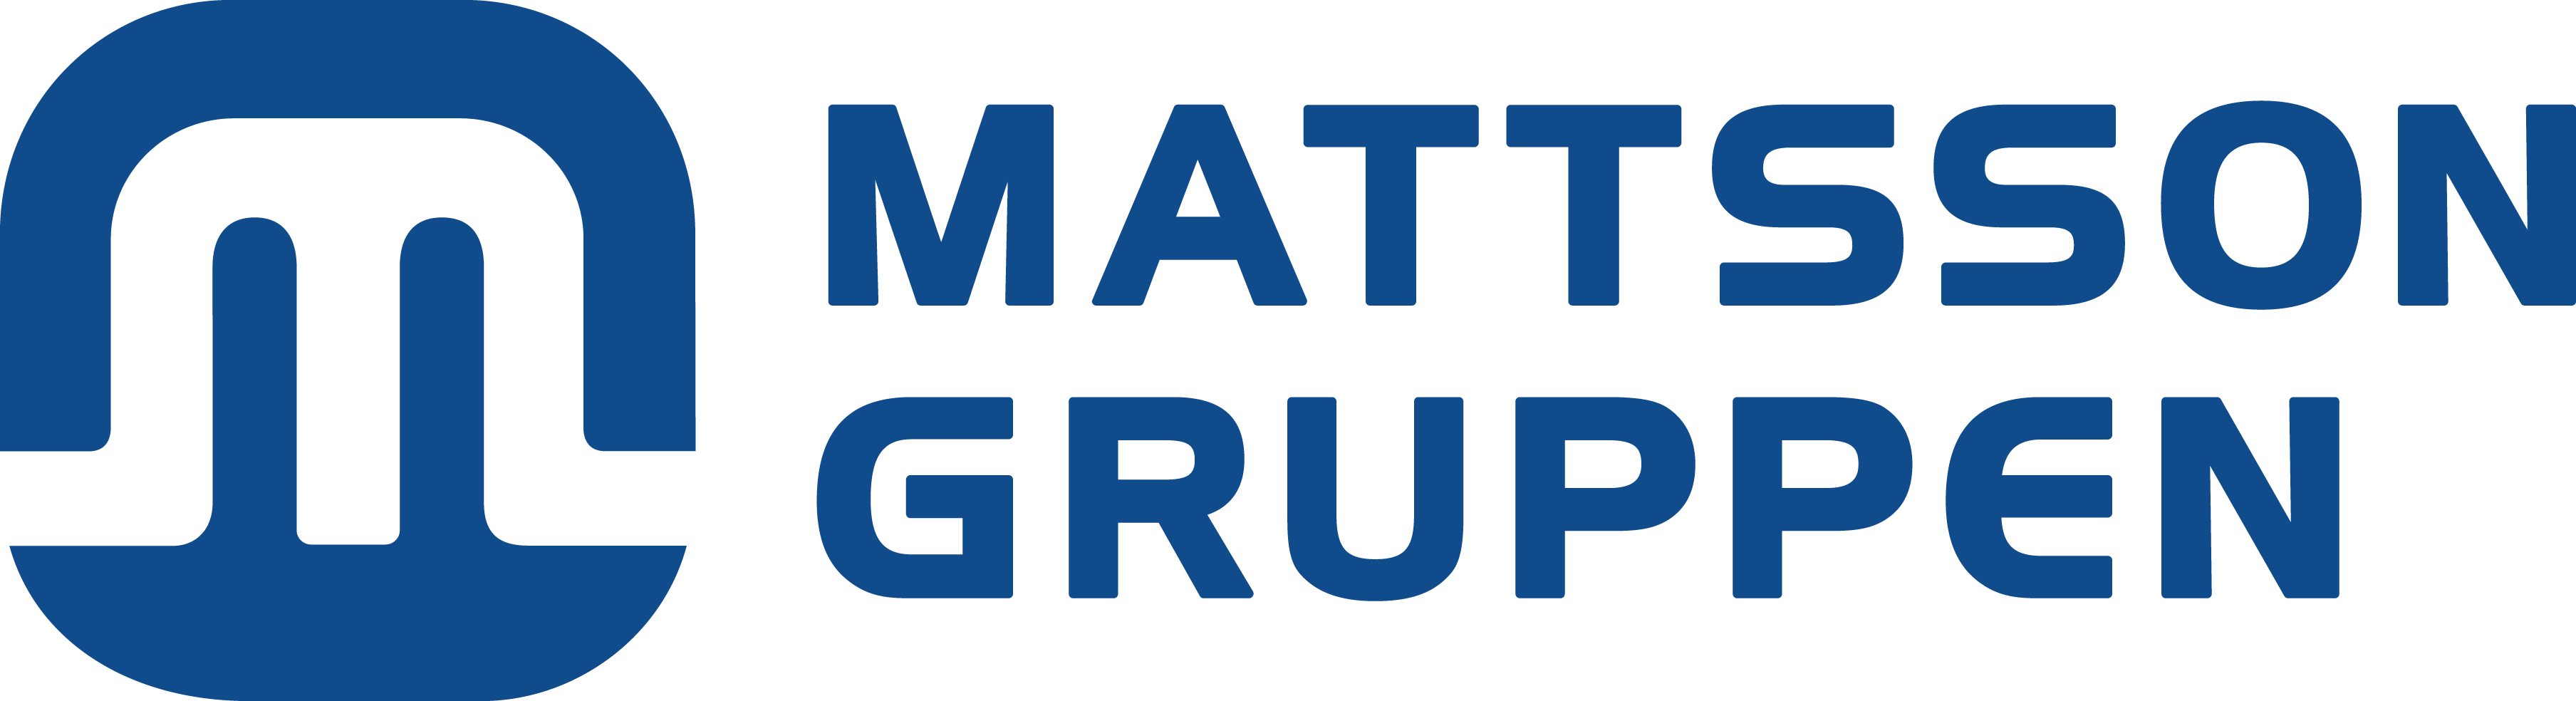 Mattsson Gruppen - partner till Mathivation